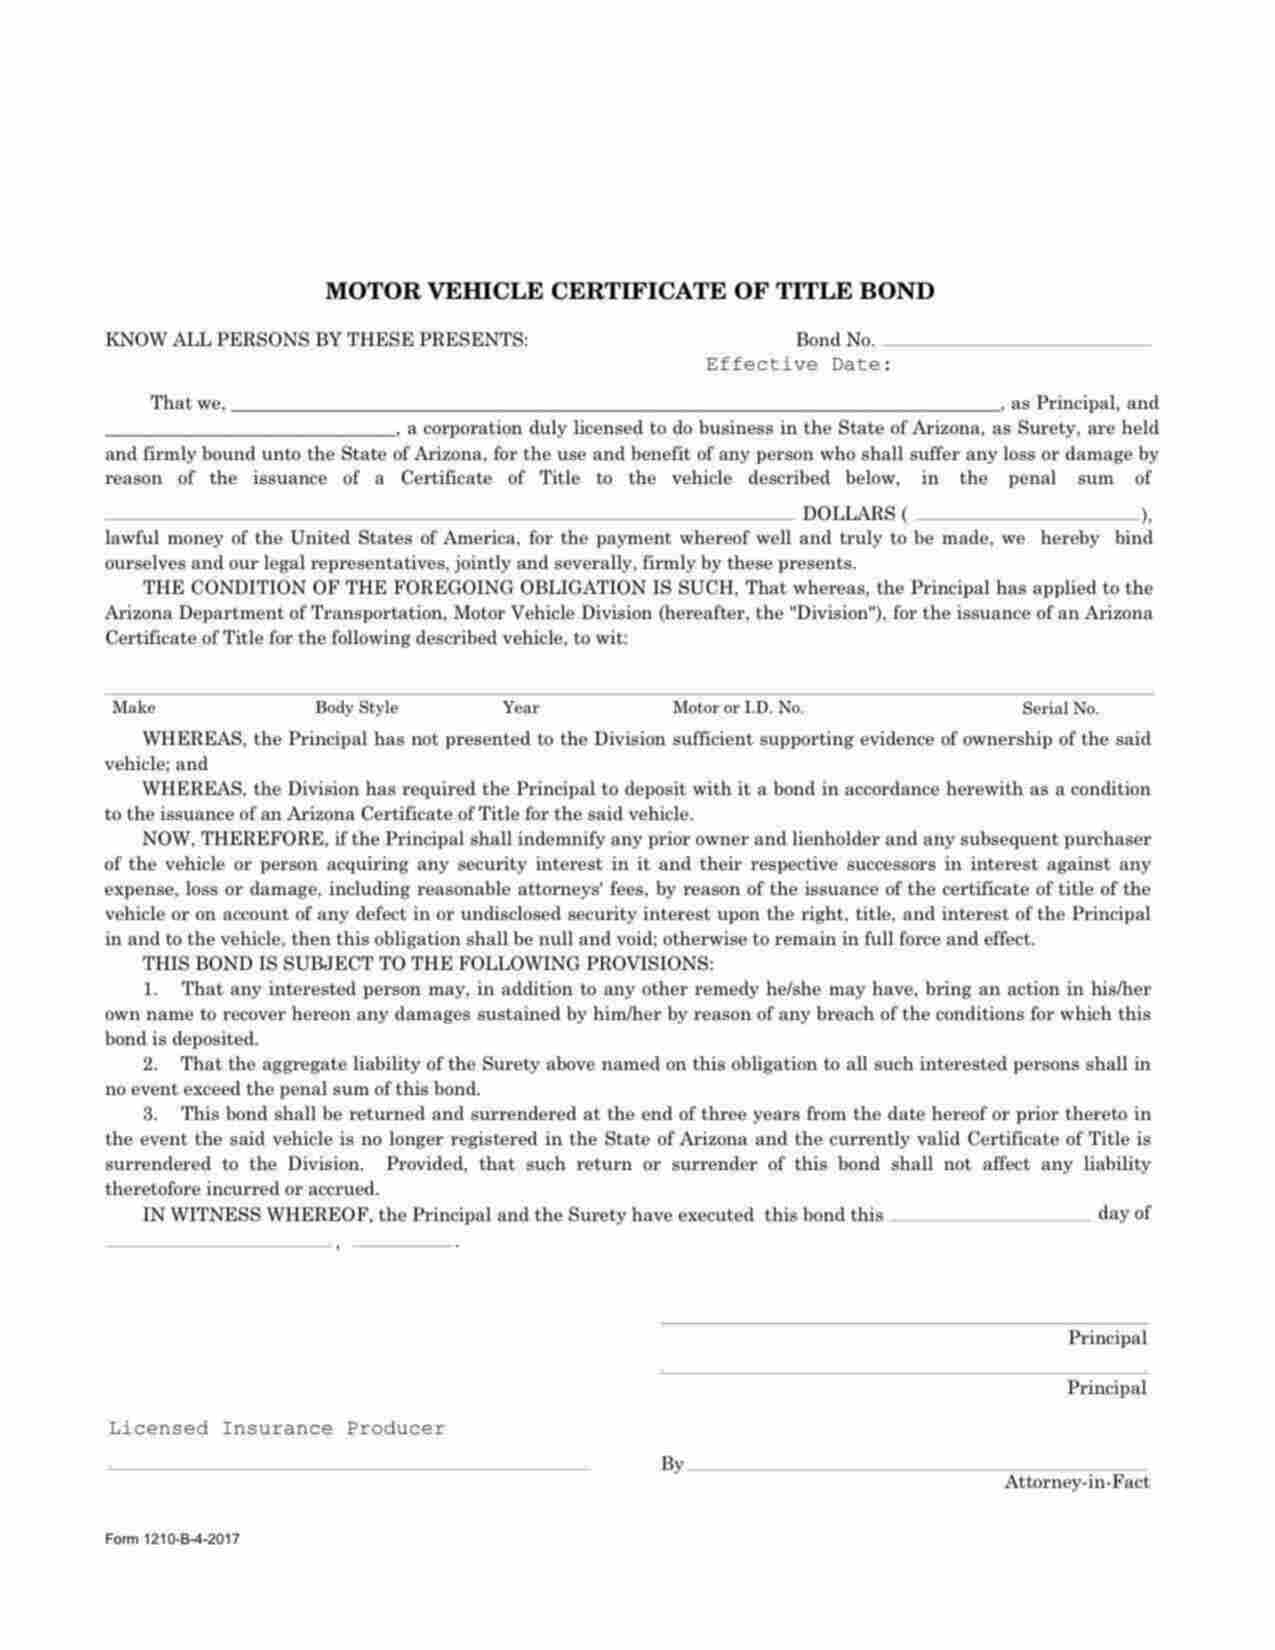 Arizona Lost Certificate of Title Bond Form